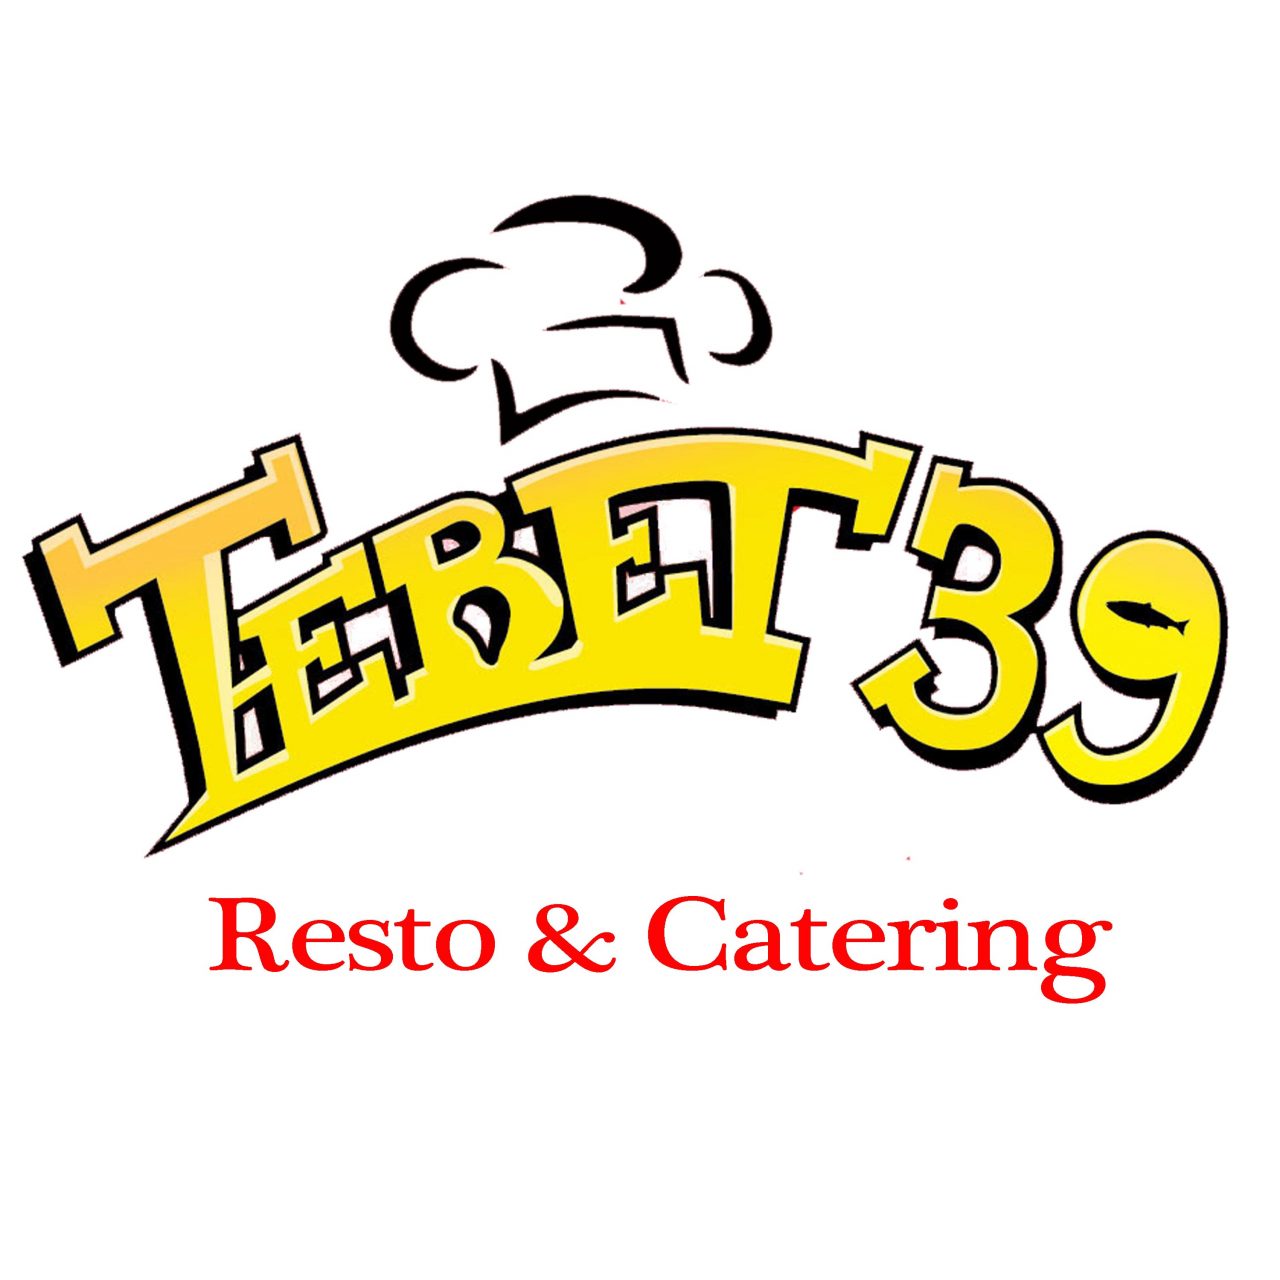 Review: Buffet Barbeque dari Tebet39 Resto & Catering